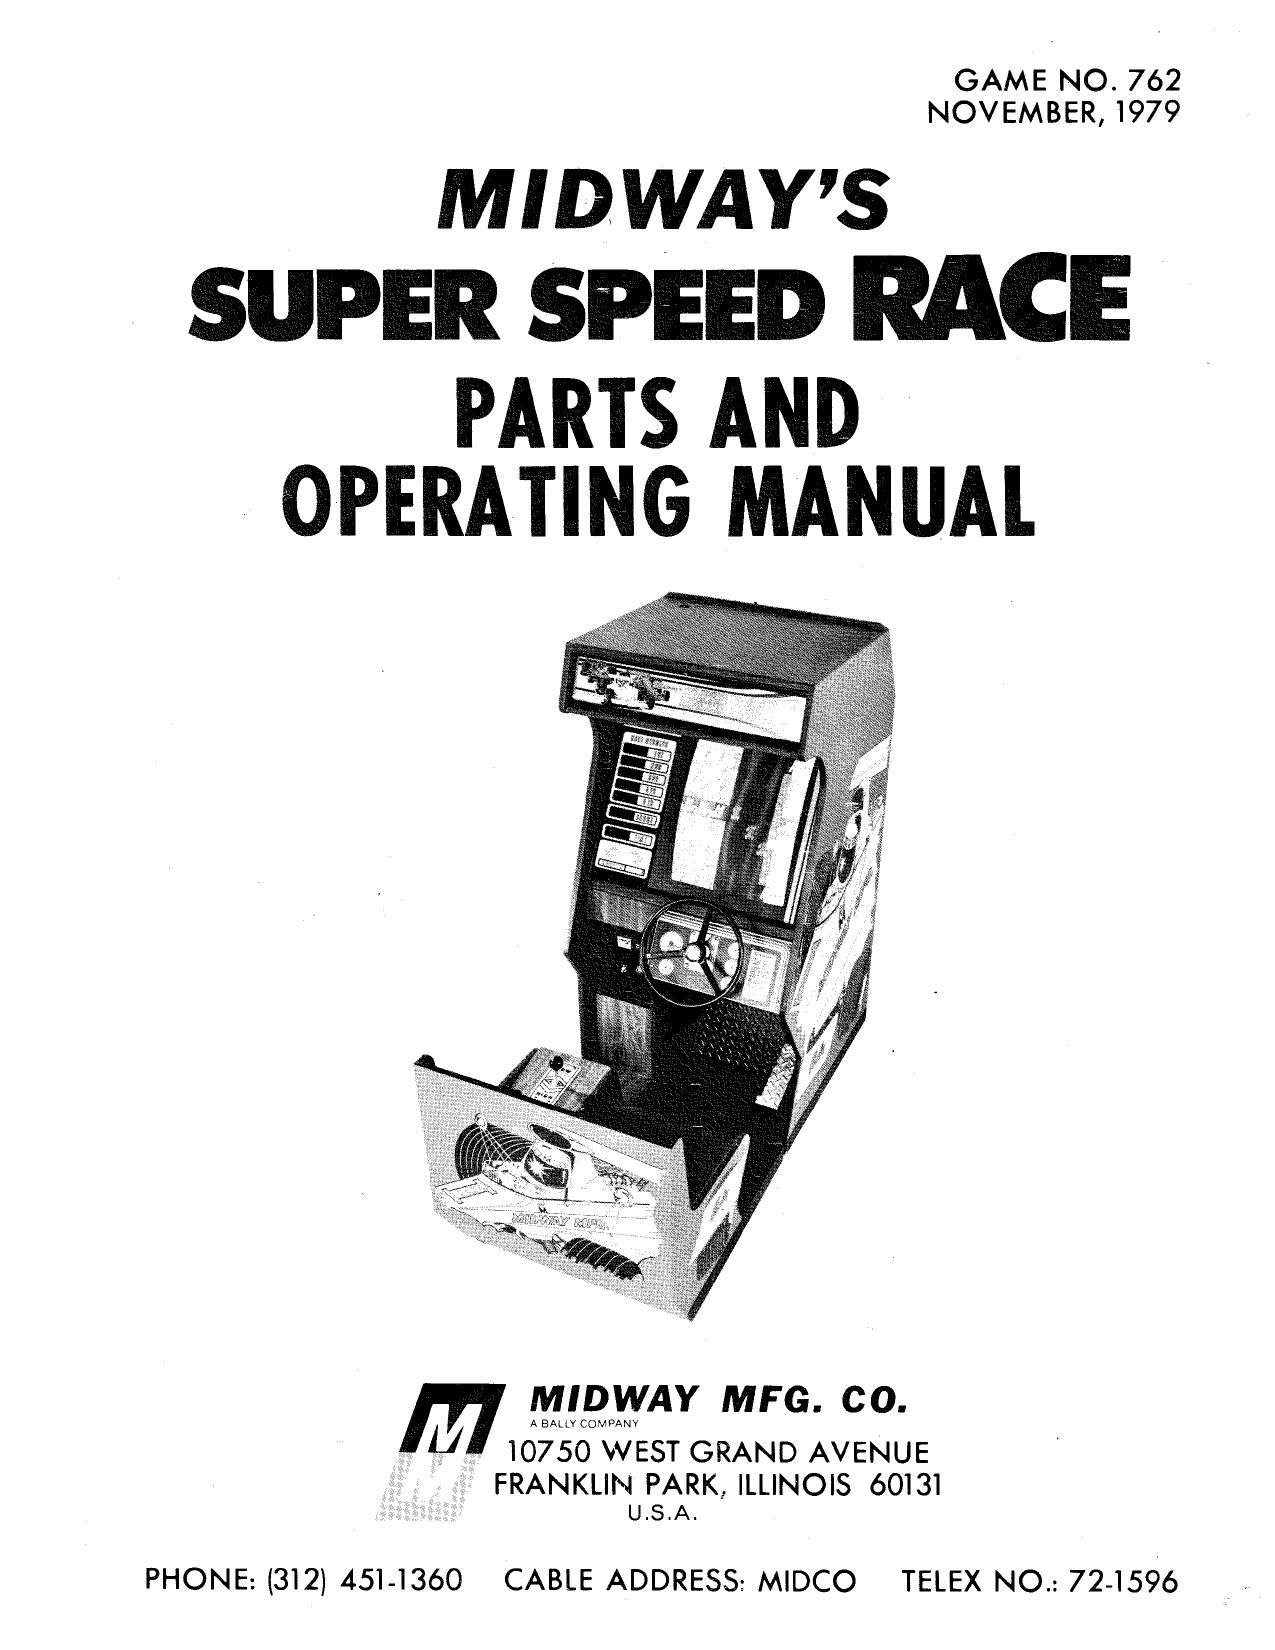 Super Speed Race